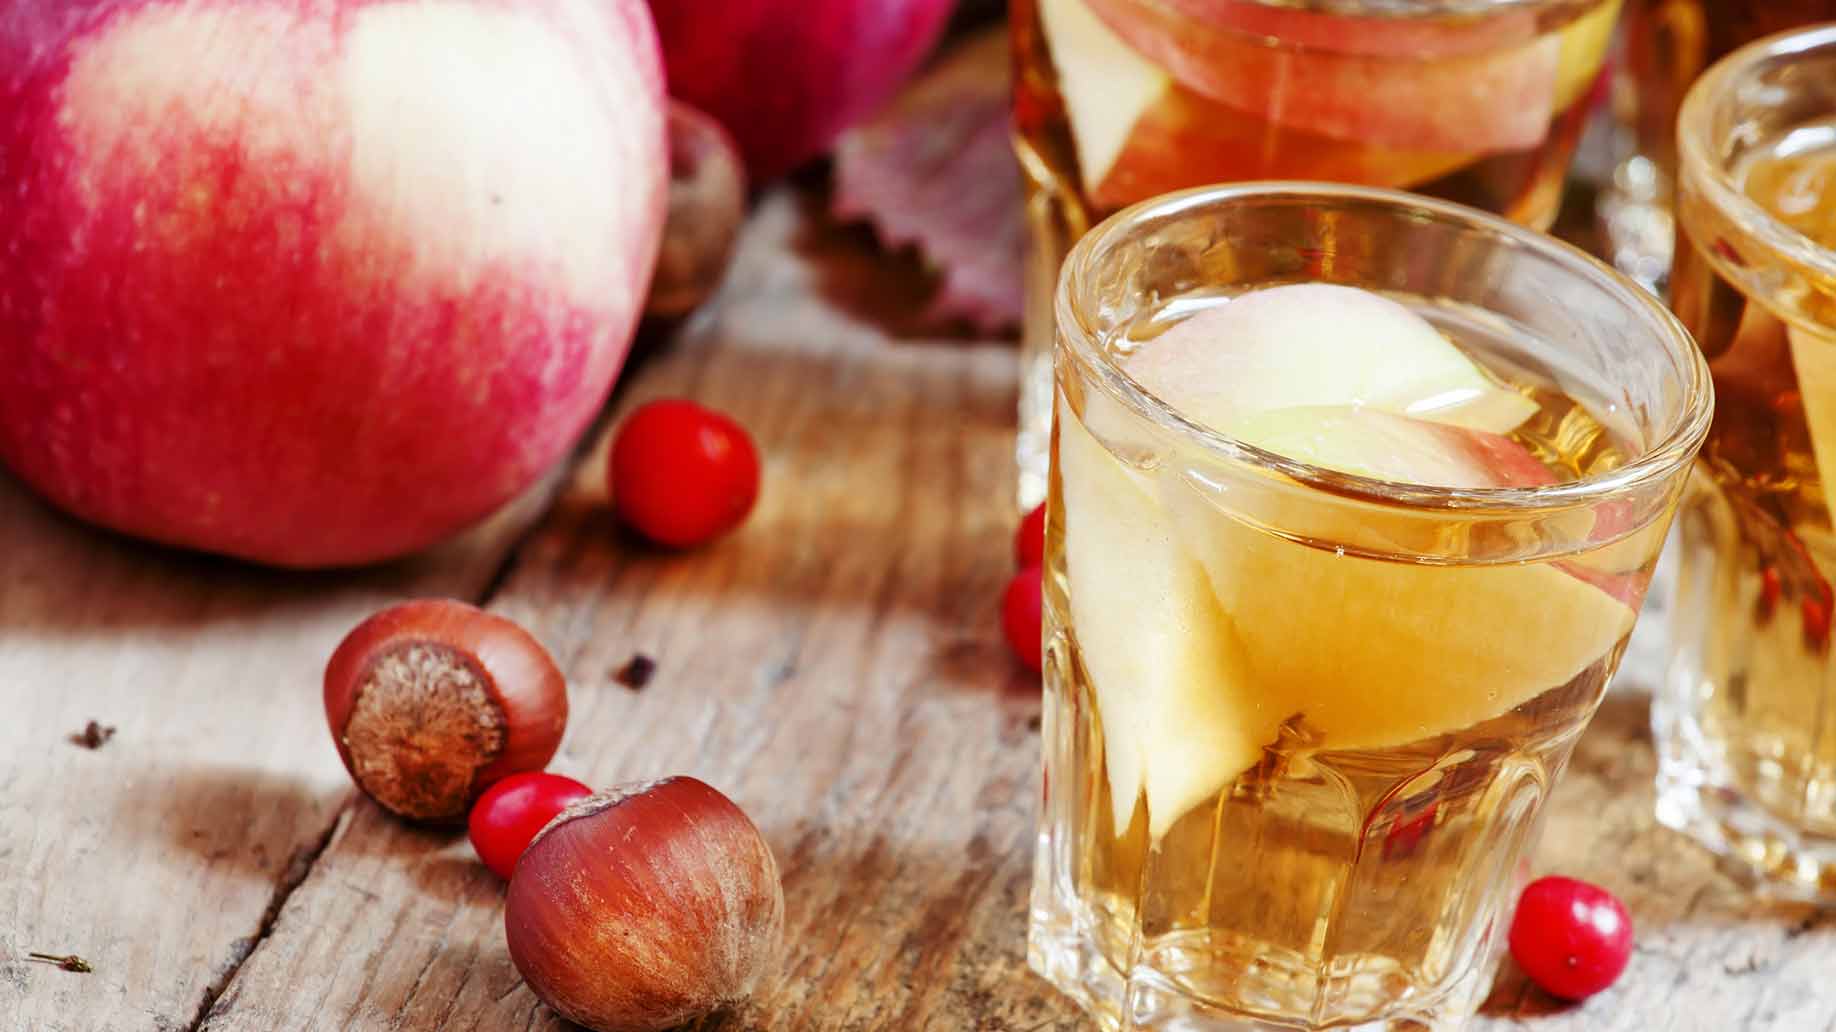 apple cider vinegar detox bath remove toxins naturally for health